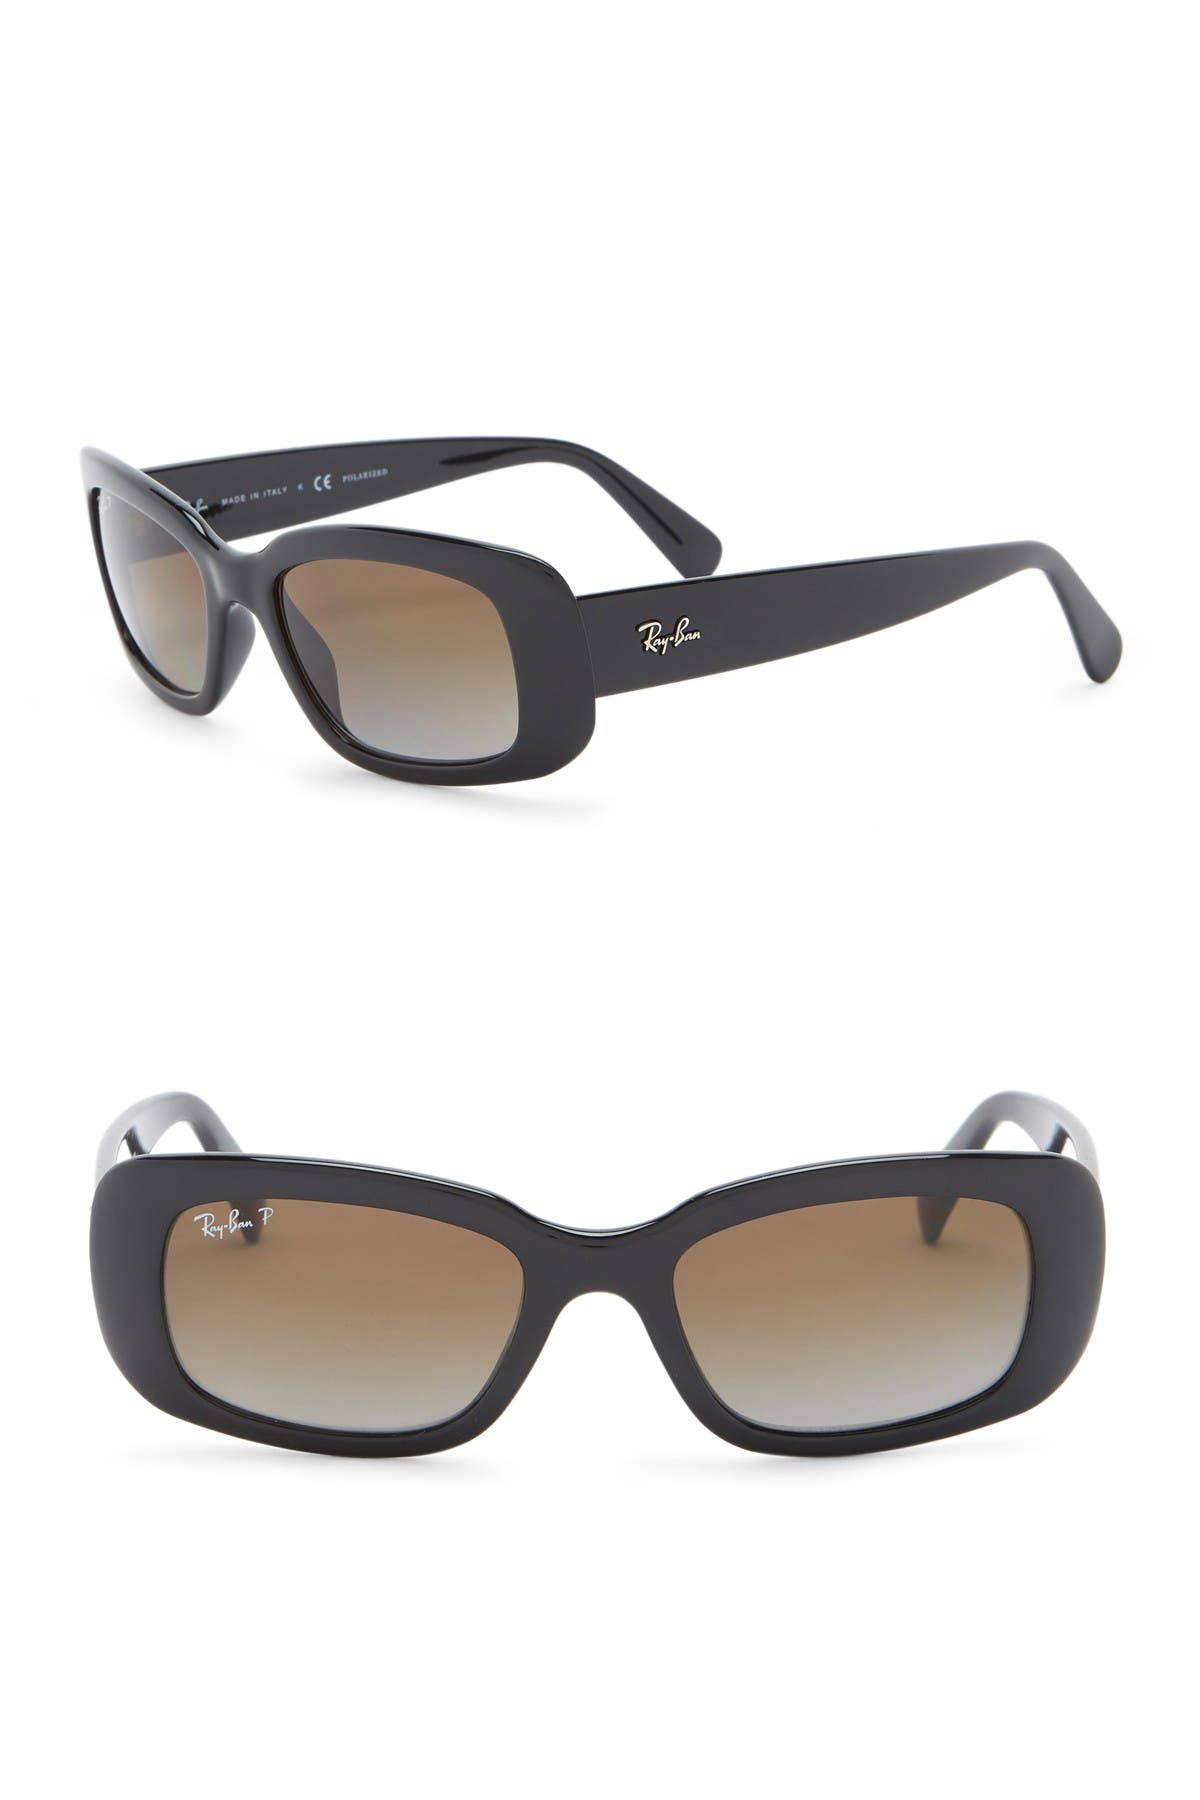 Ray Ban 50mm Rectangle Polarized Sunglasses Nordstrom Rack